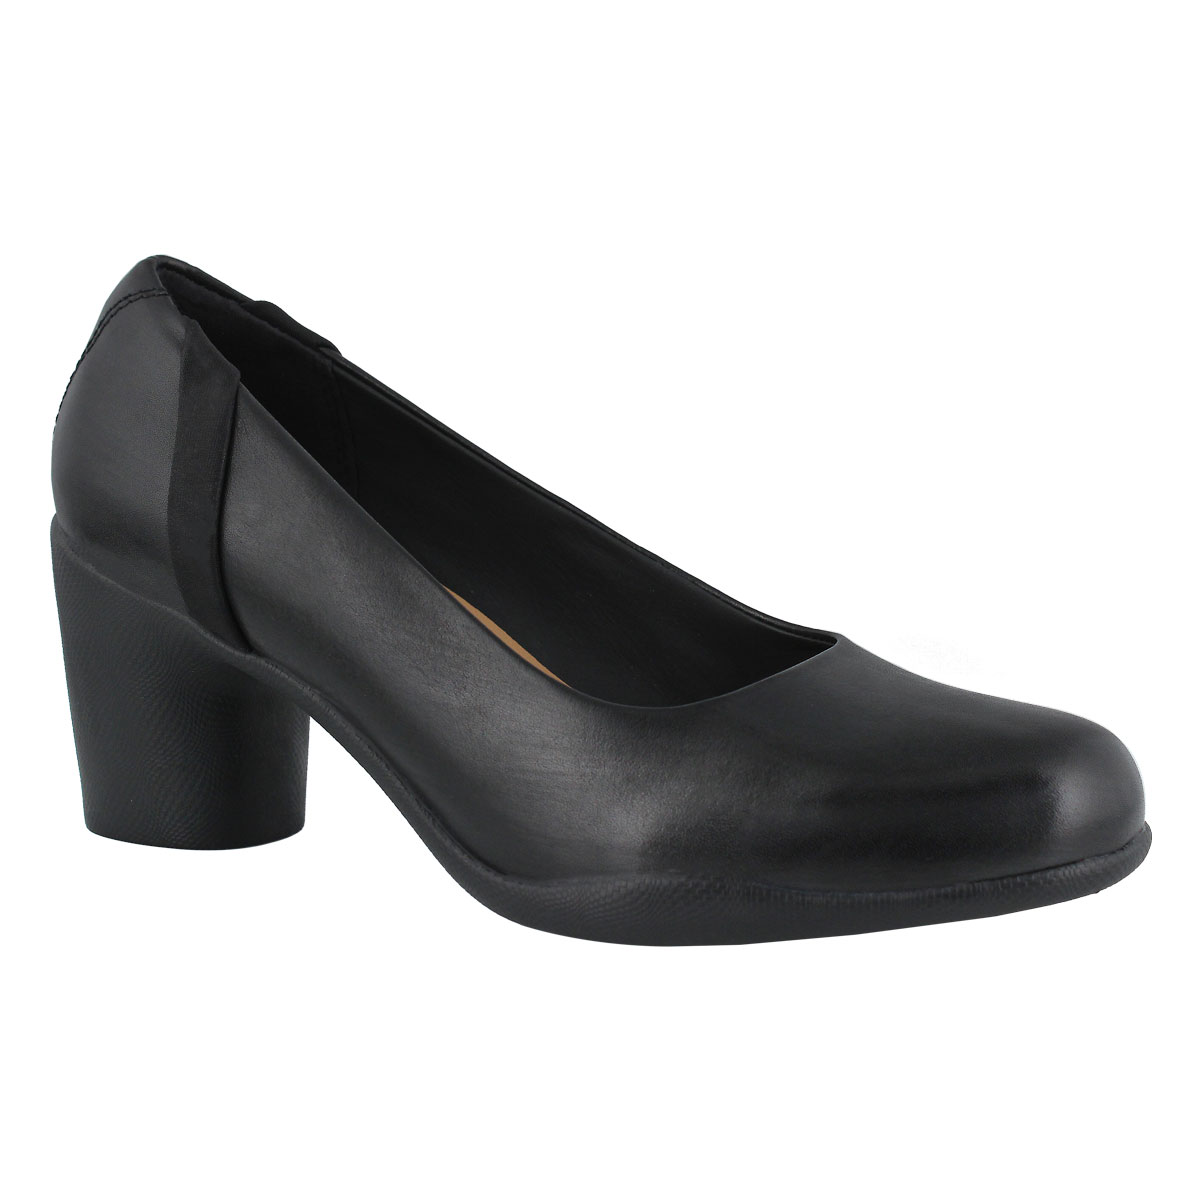 UN ROSA STEP black dress heel 